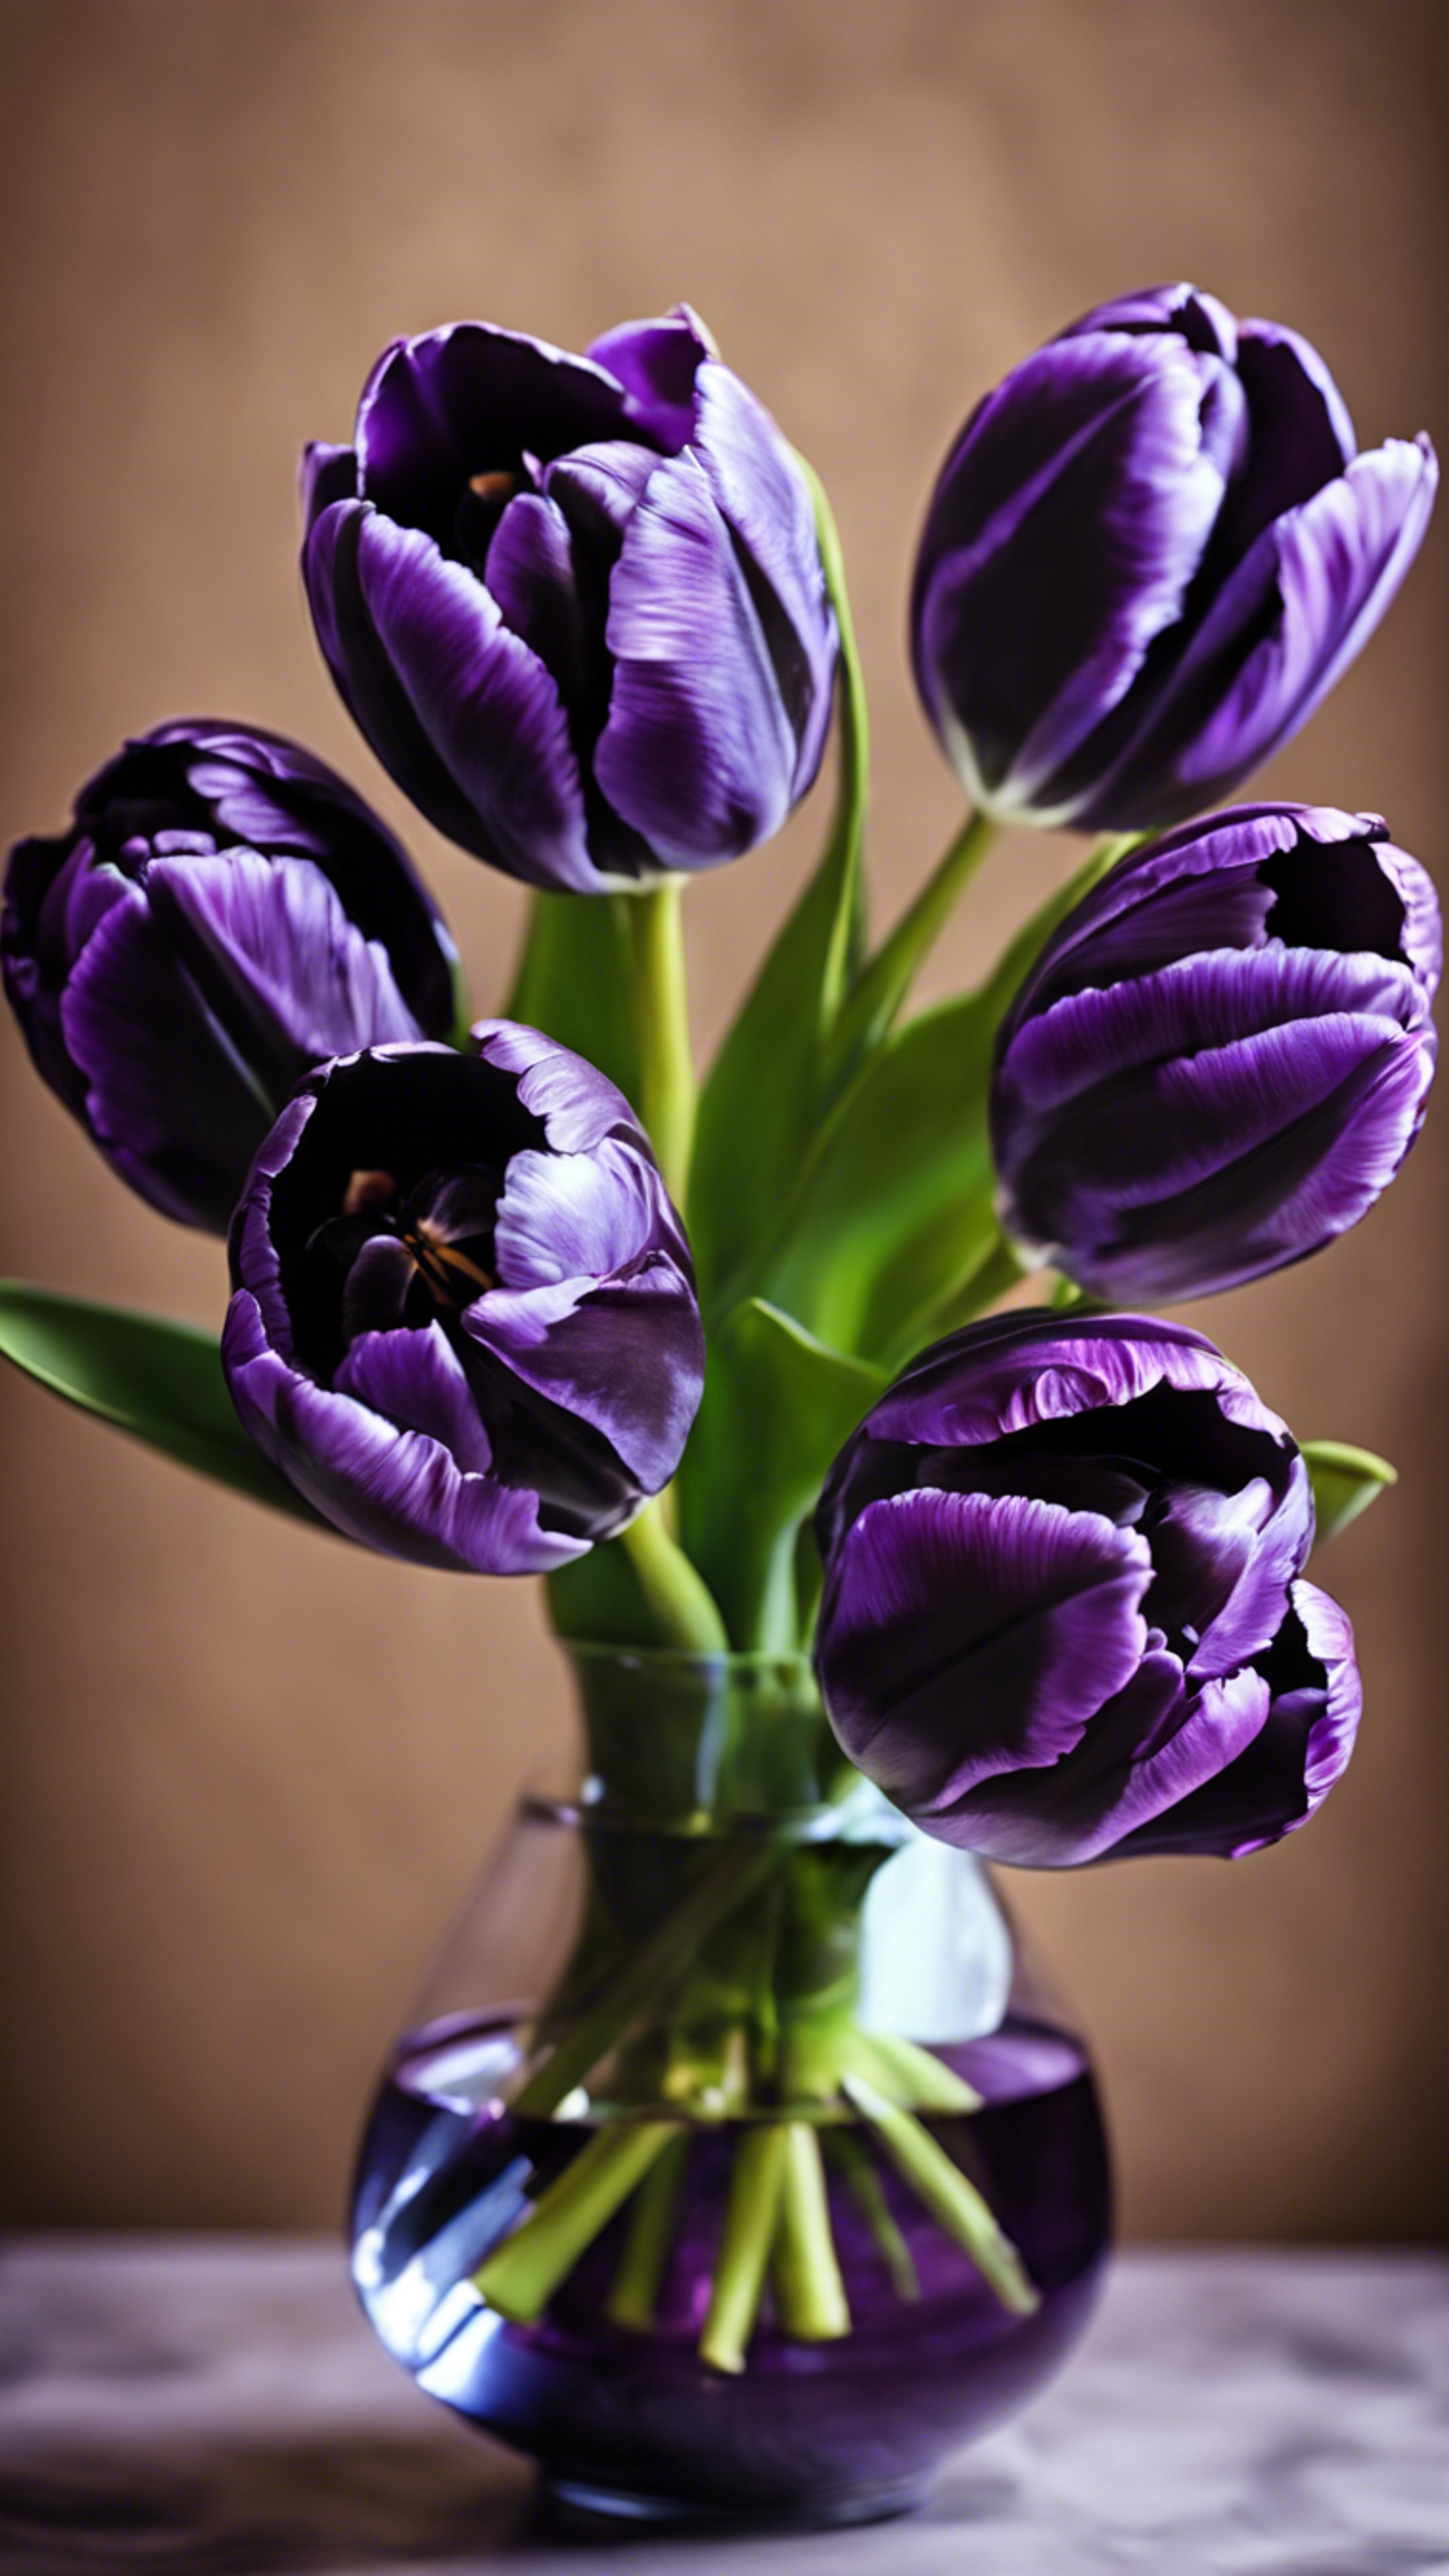 Black tulips with purple edges in full bloom in an elegant vase. Wallpaper[bf30bf151b944cb69afa]